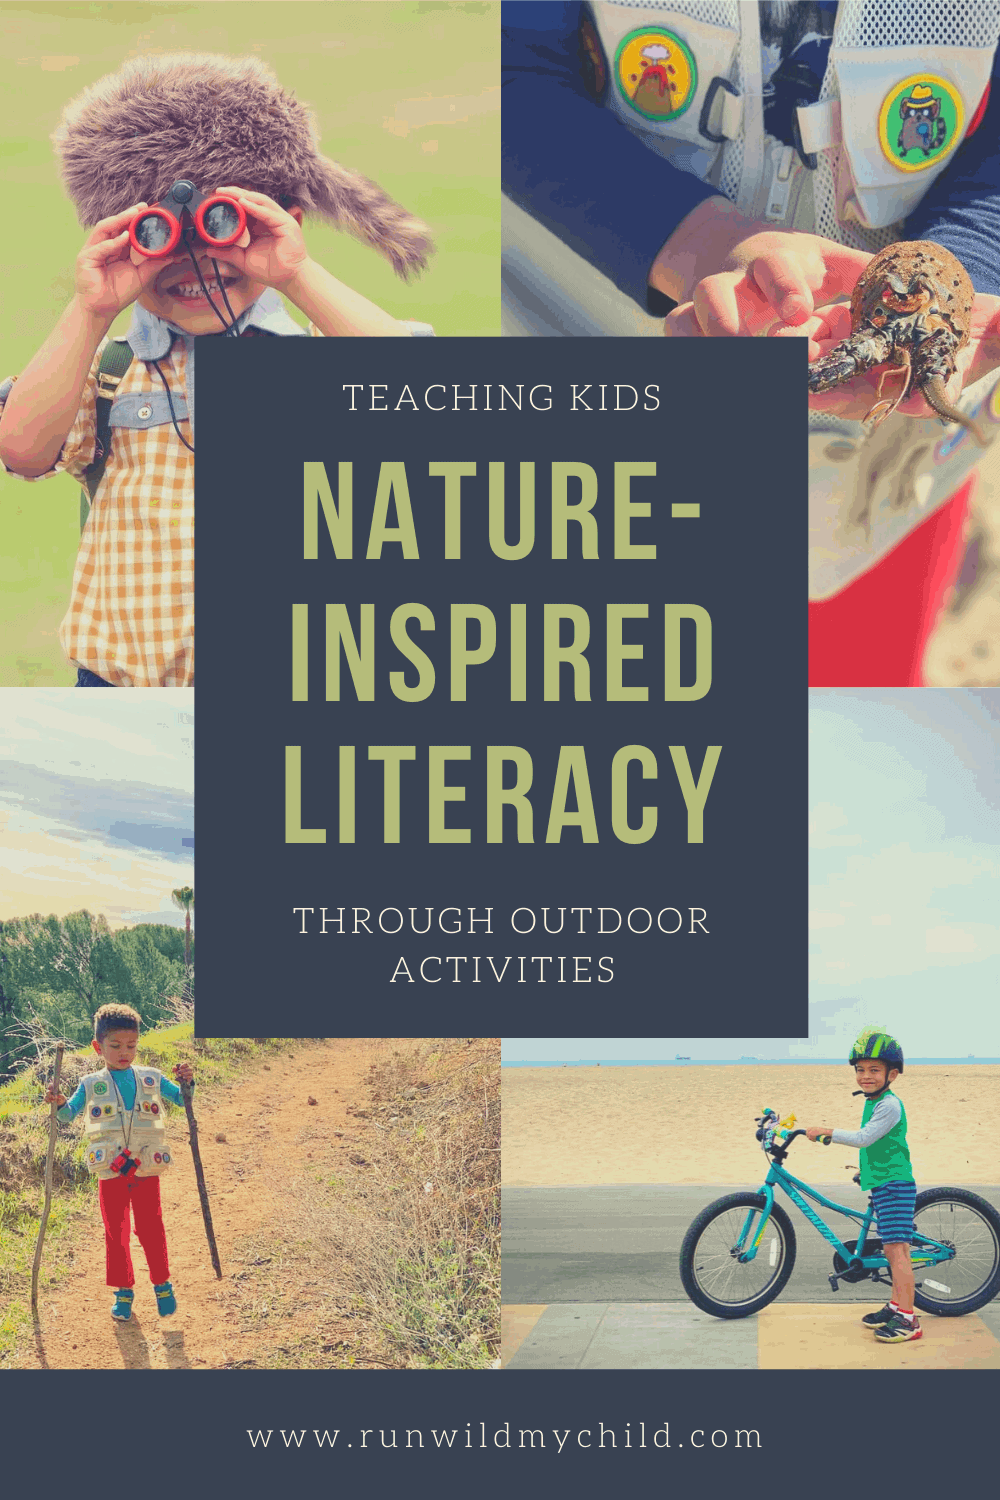 Teaching kids nature-inspired literacy through outdoor activities